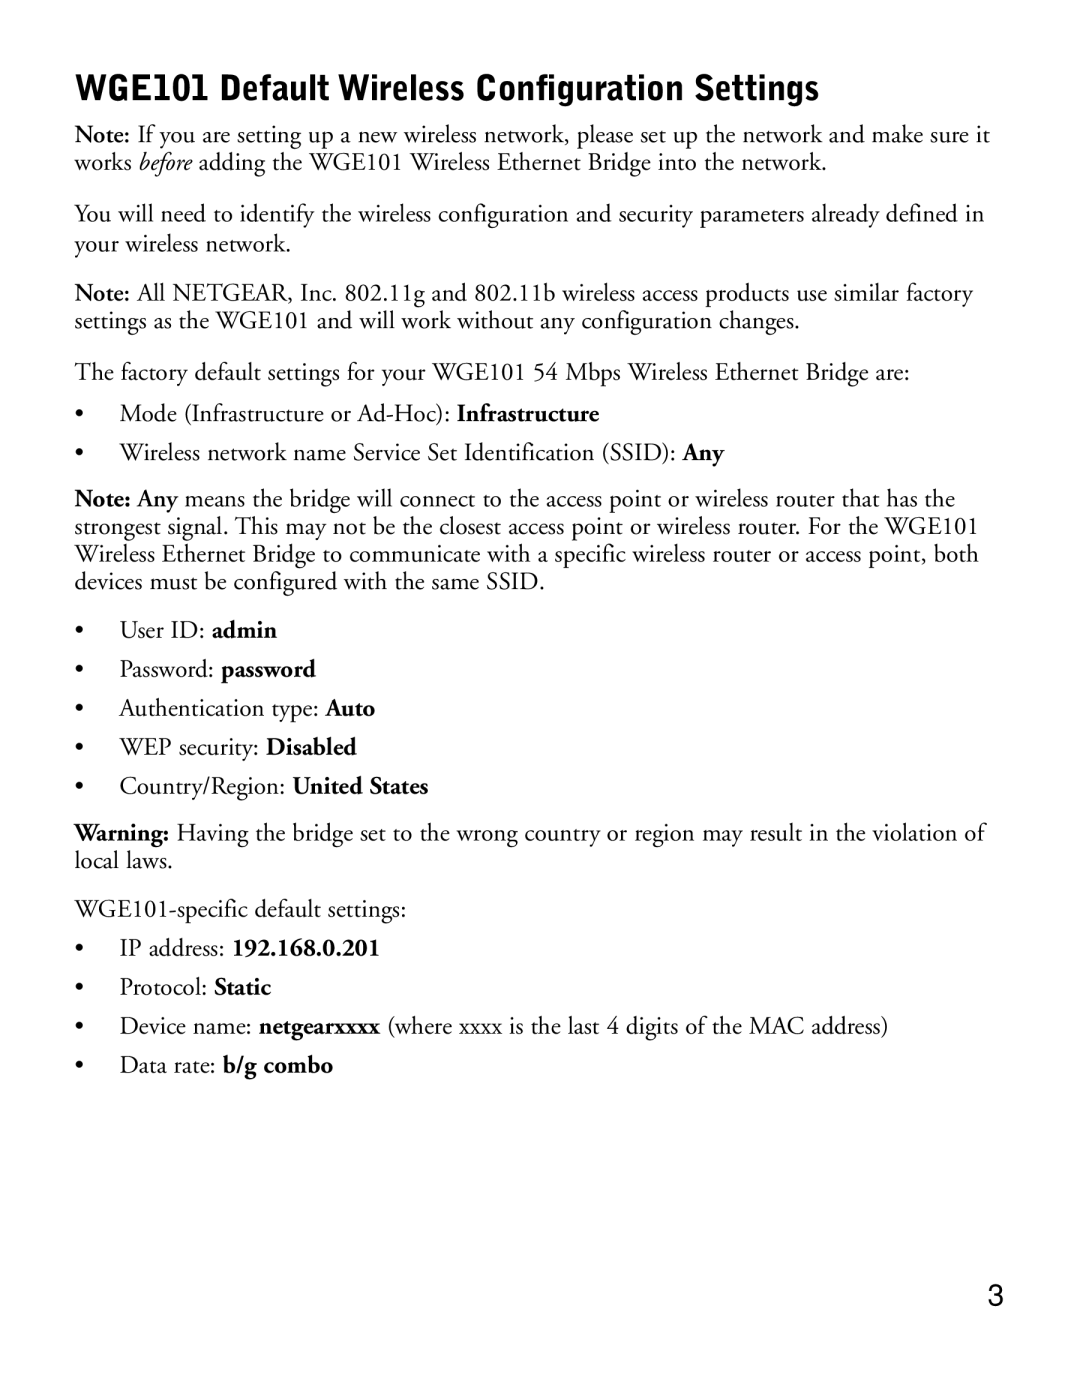 NETGEAR manual WGE101 Default Wireless Configuration Settings, IP address 